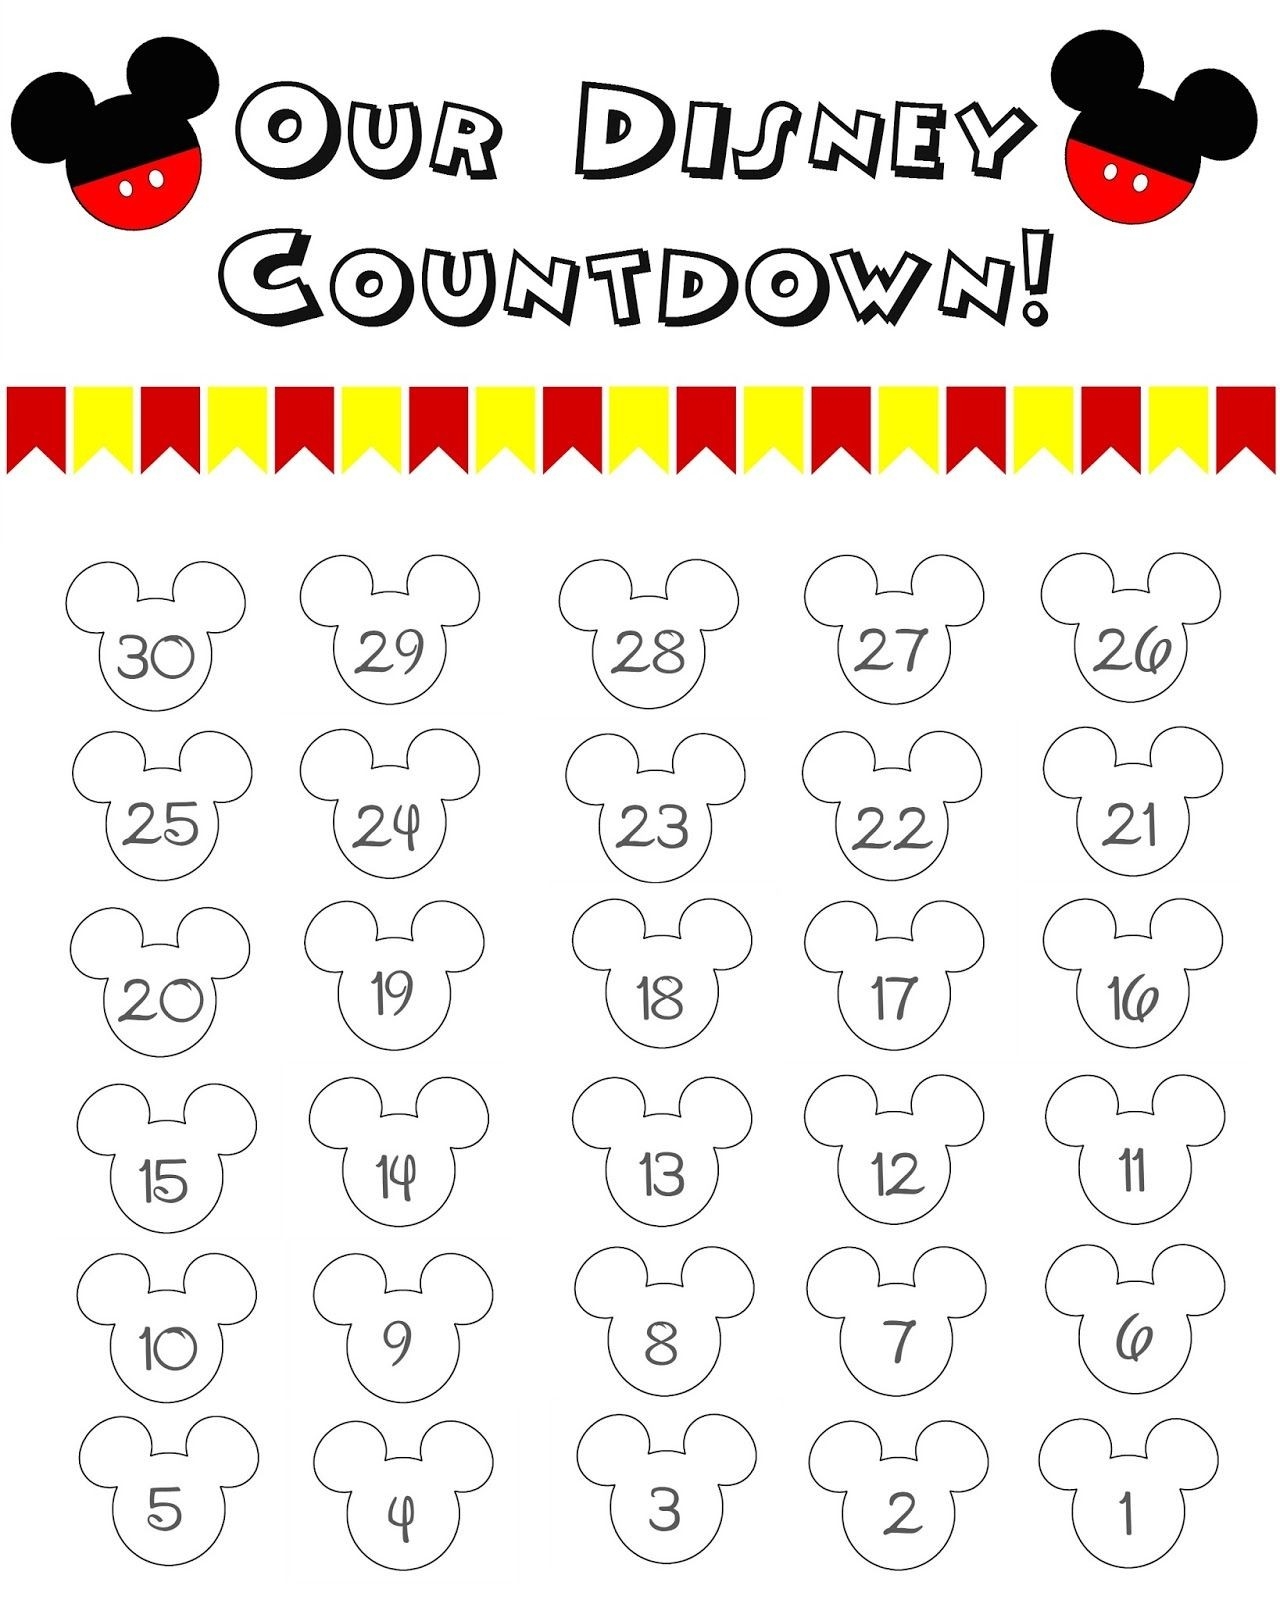 Disney World Countdown Calendar - Free Printable | The Momma-Printable Coutndown Days Template